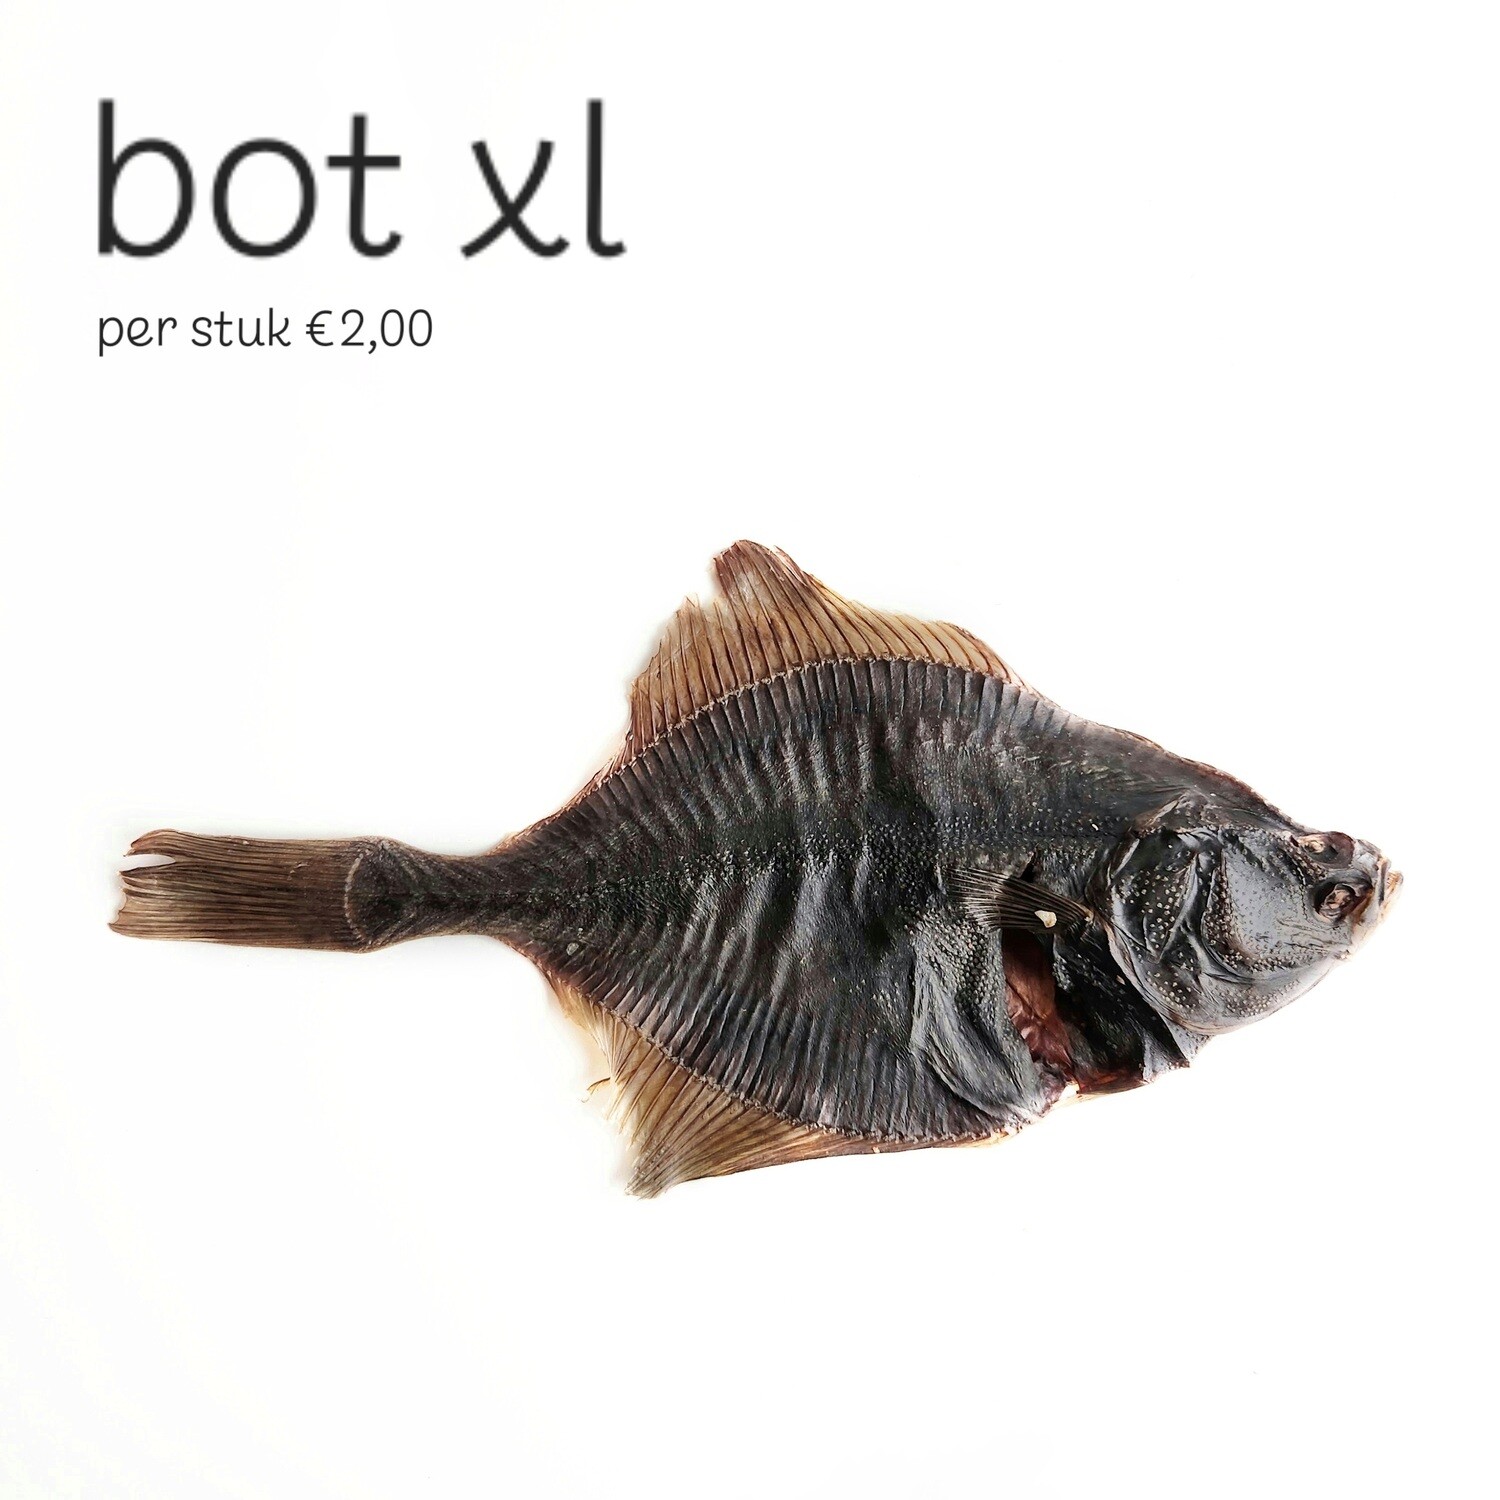 Bot XL